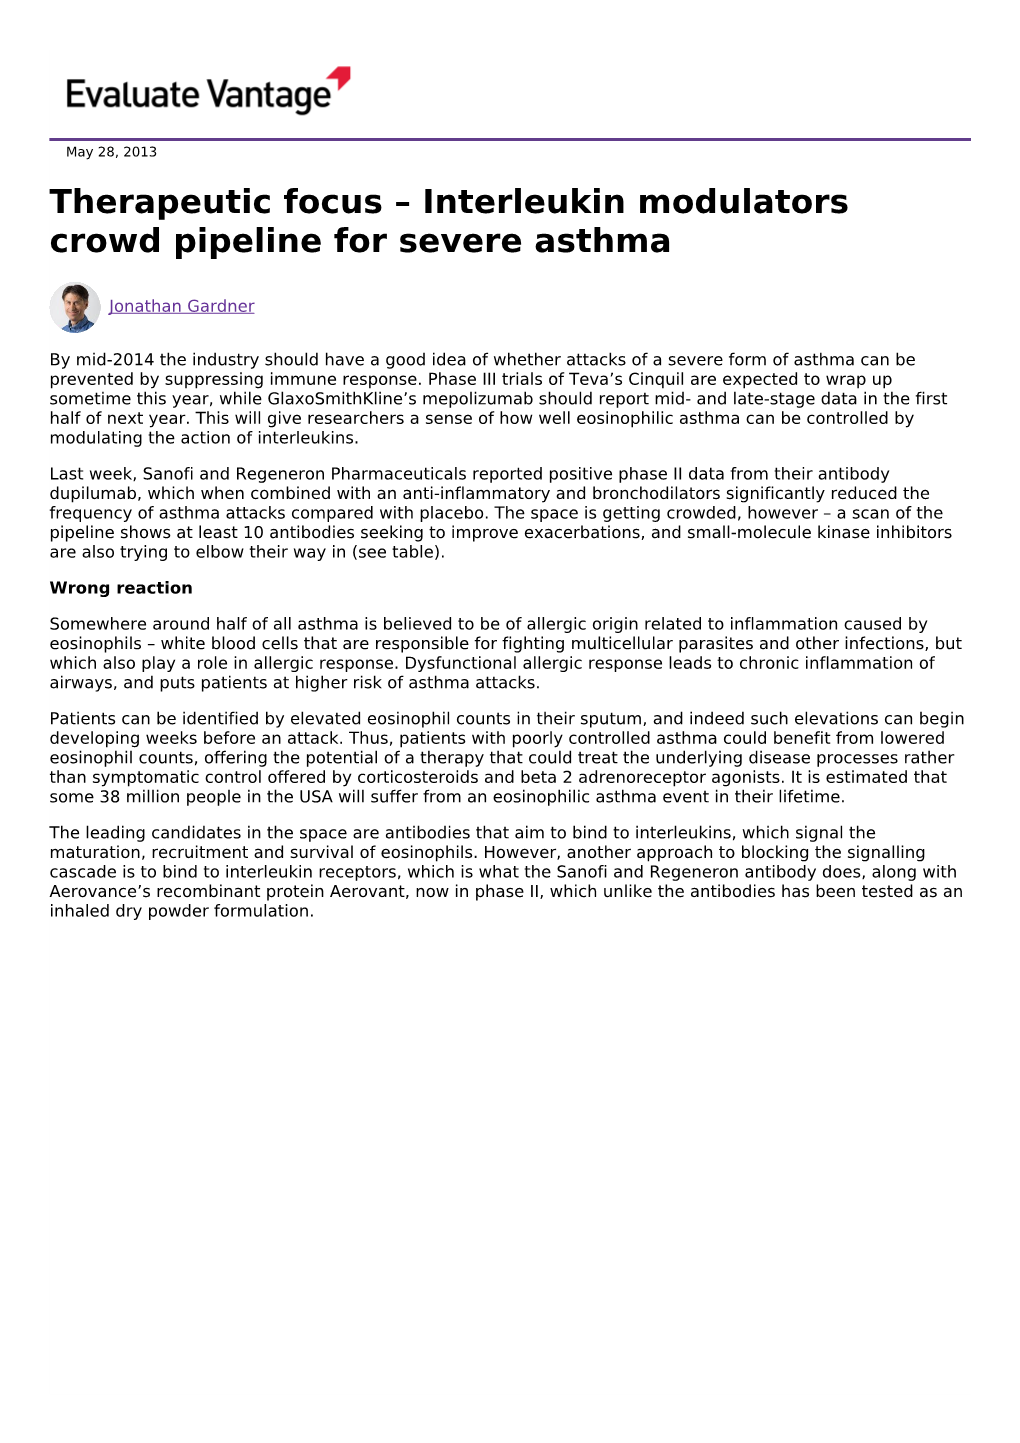 Interleukin Modulators Crowd Pipeline for Severe Asthma